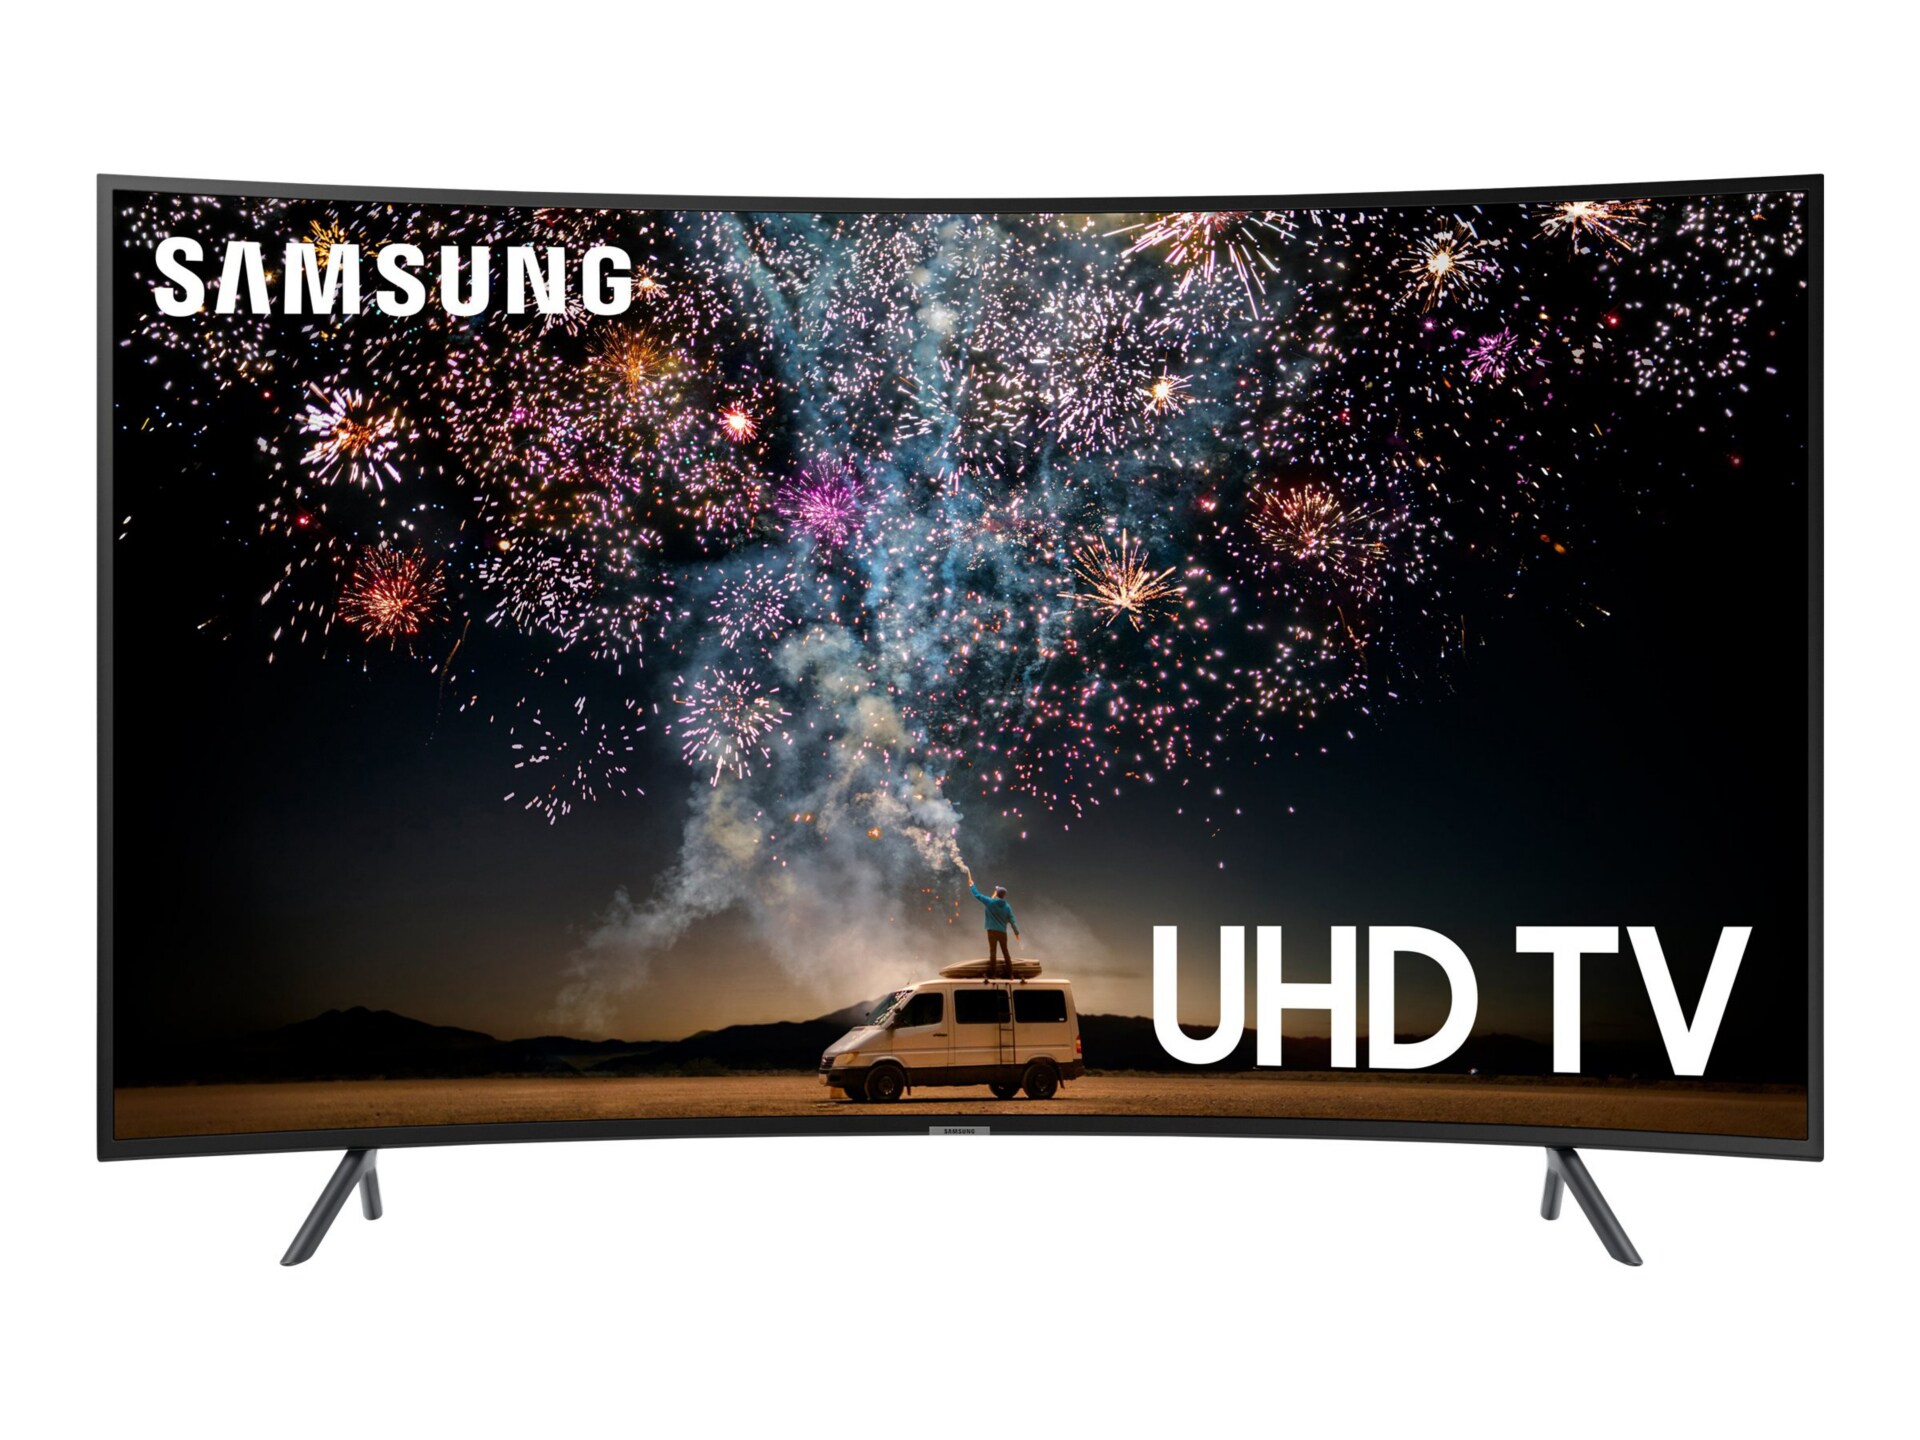 Samsung UN65RU7300F 7 Series - 65" Class (64.5" viewable) LED TV